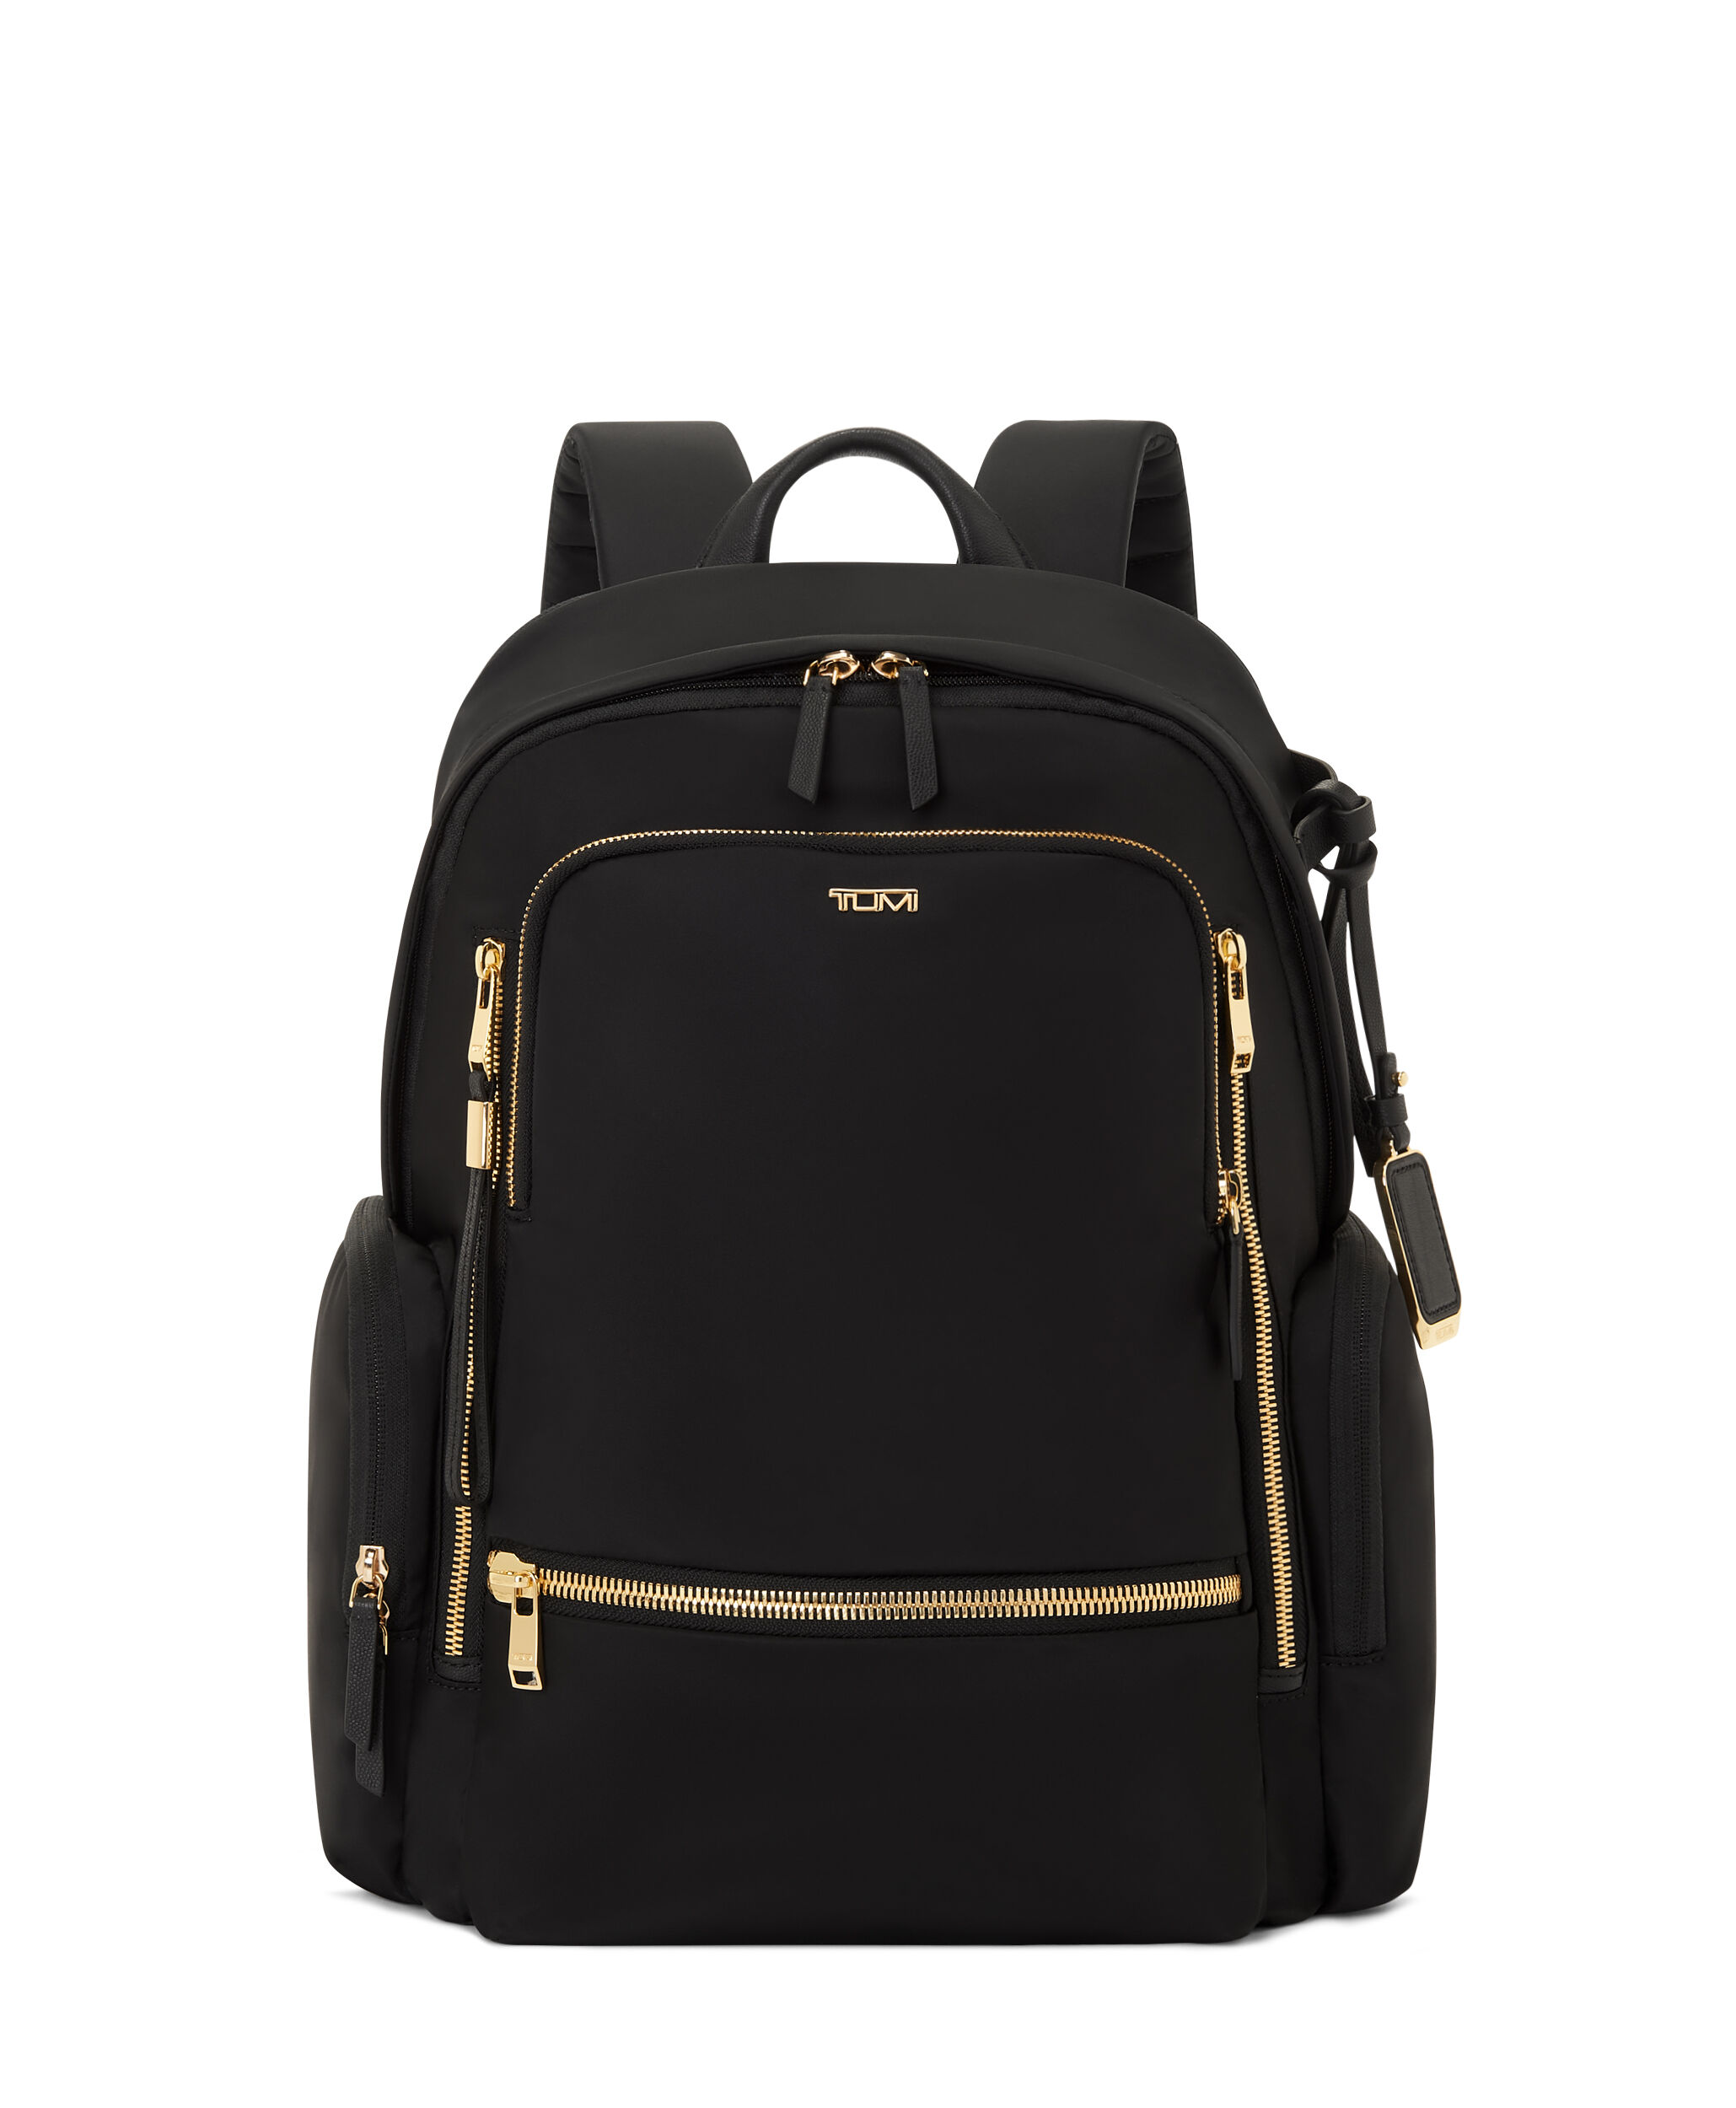 TUMI - Voyageur Hilden Backpack - Black | Black backpack, Tumi bags,  Backpacks